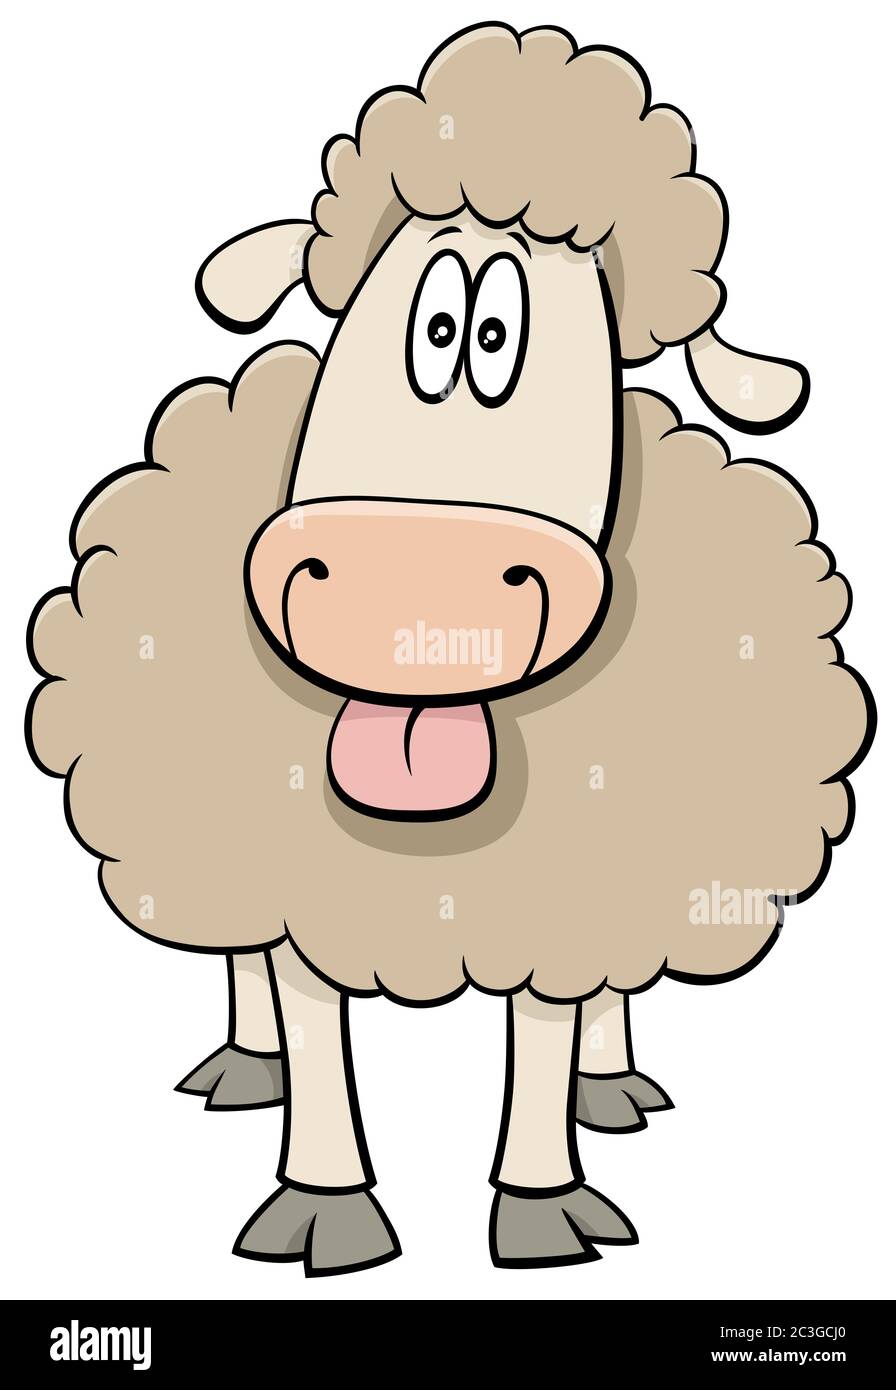 divertido dibujo animado ovejas granja carácter animal Fotografía de stock  - Alamy